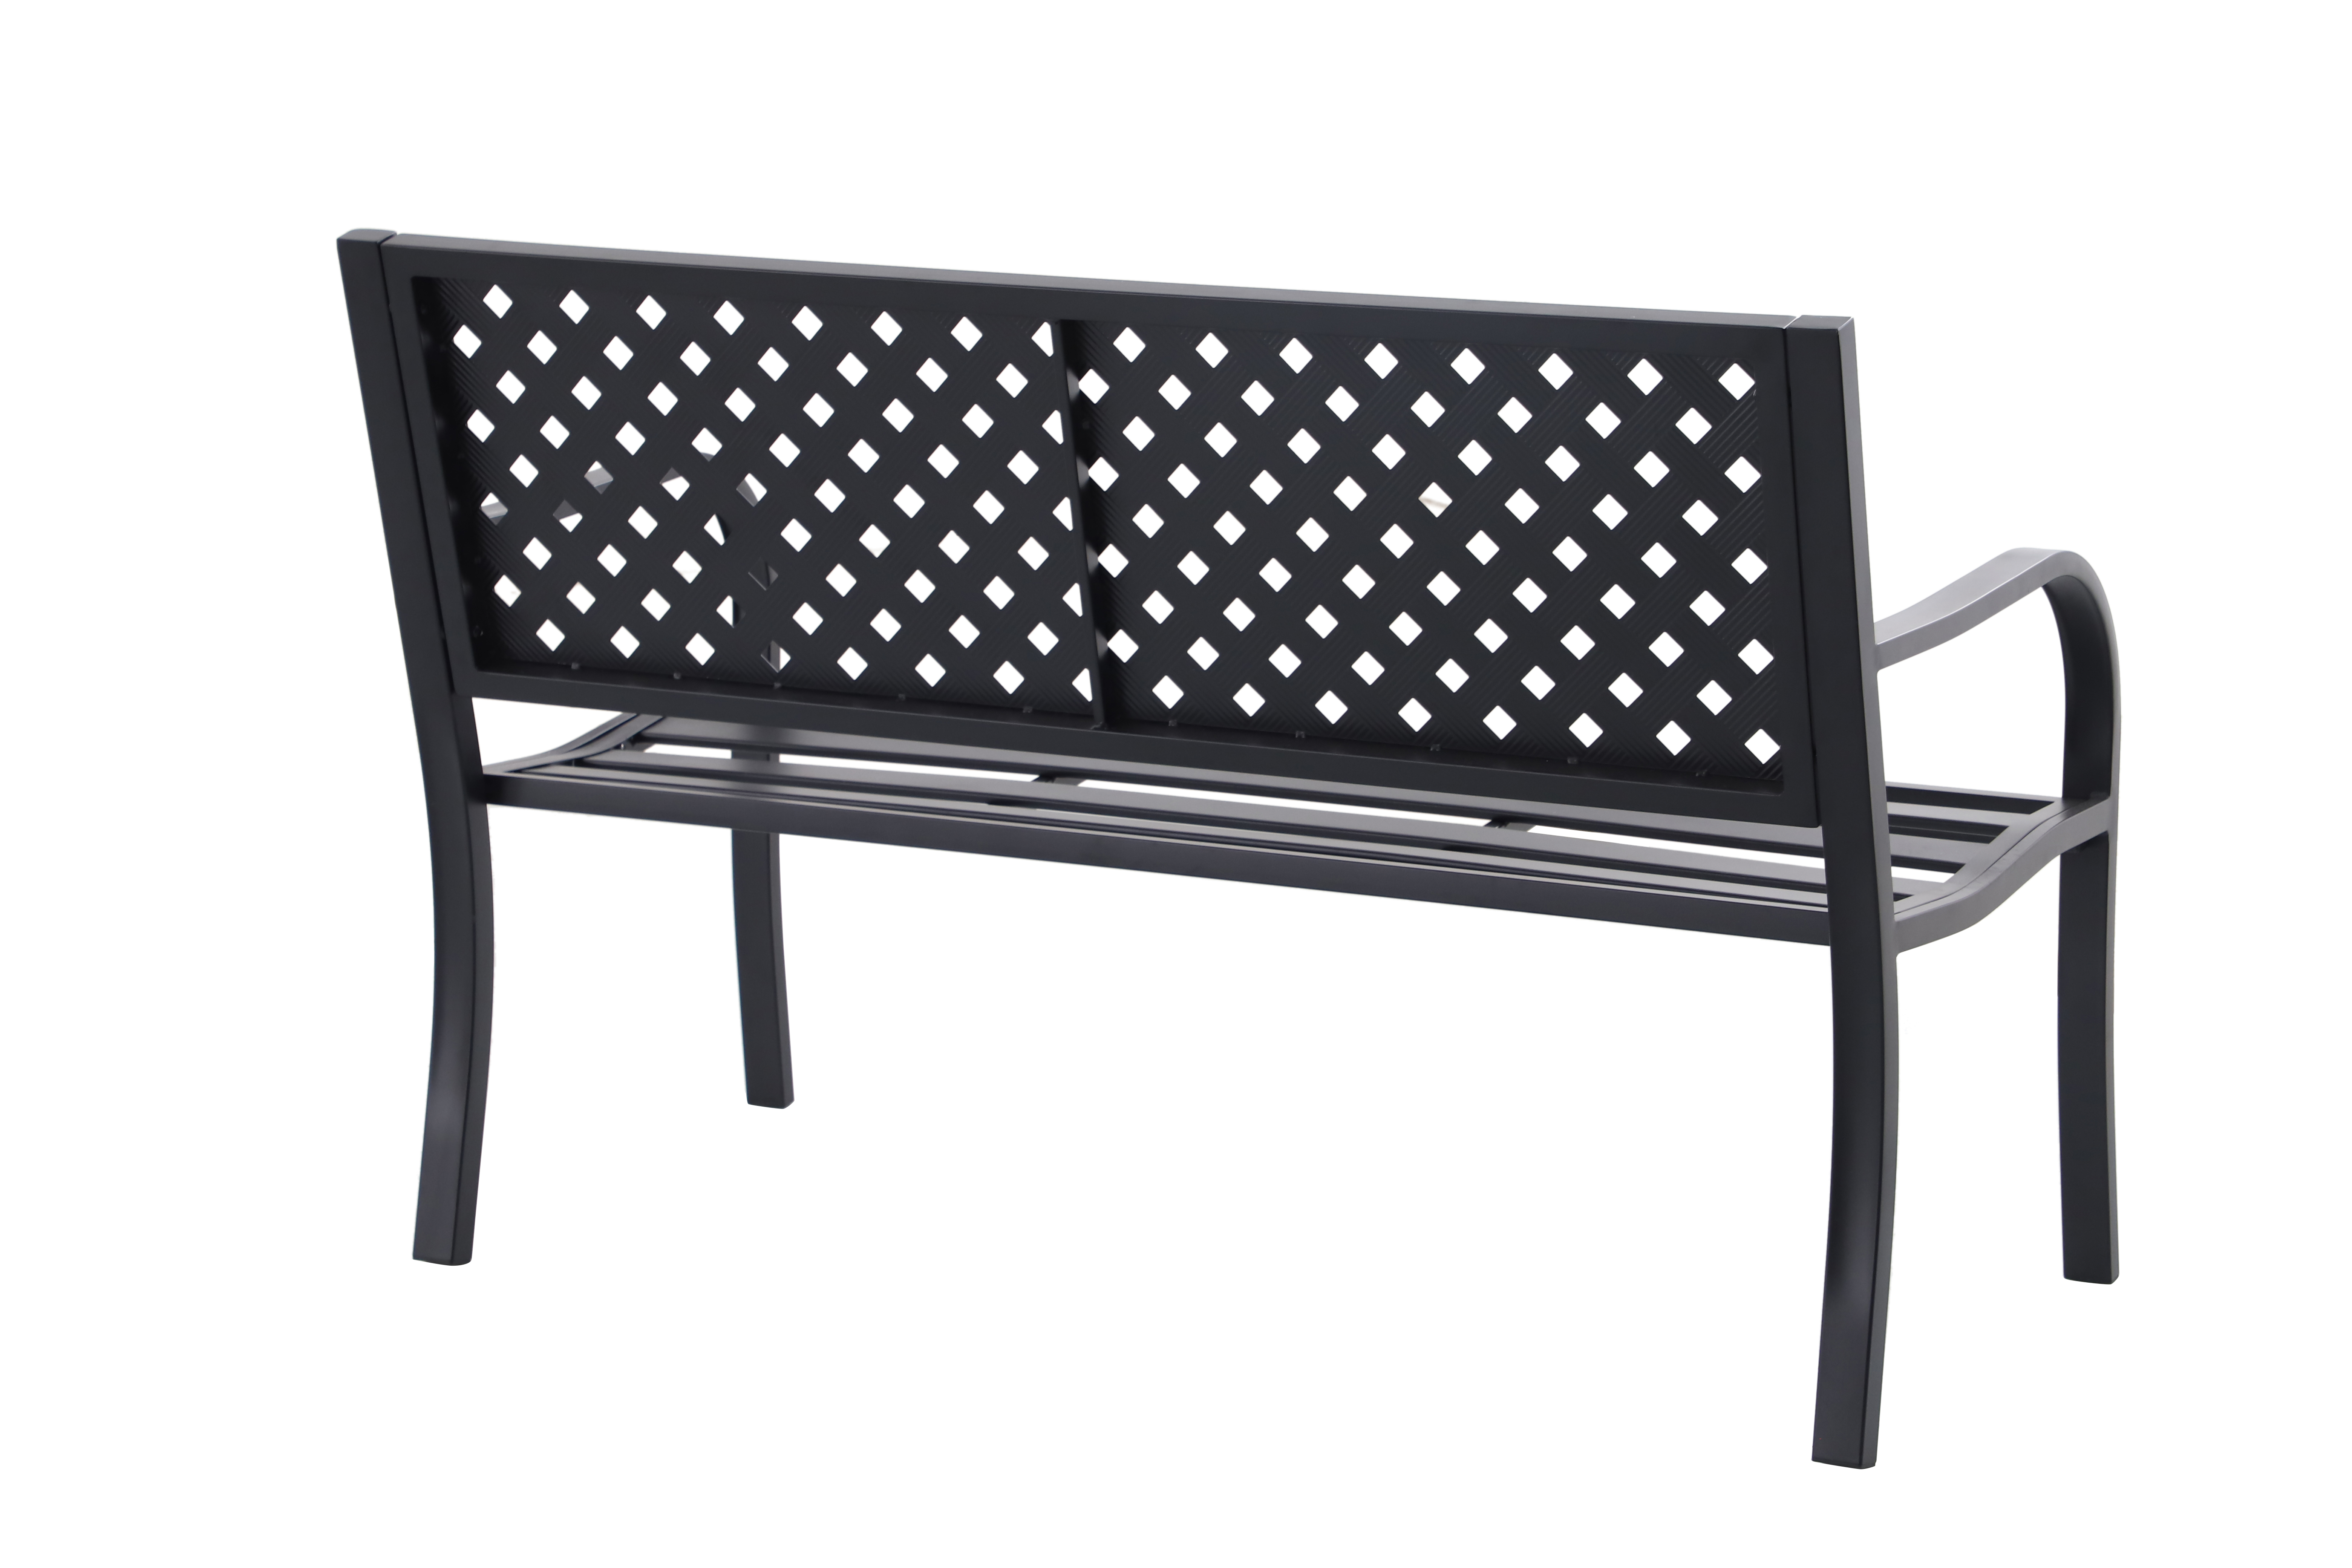 Mainstays Lattice High Back Slat Seat Steel Garden Bench, Black - image 5 of 12